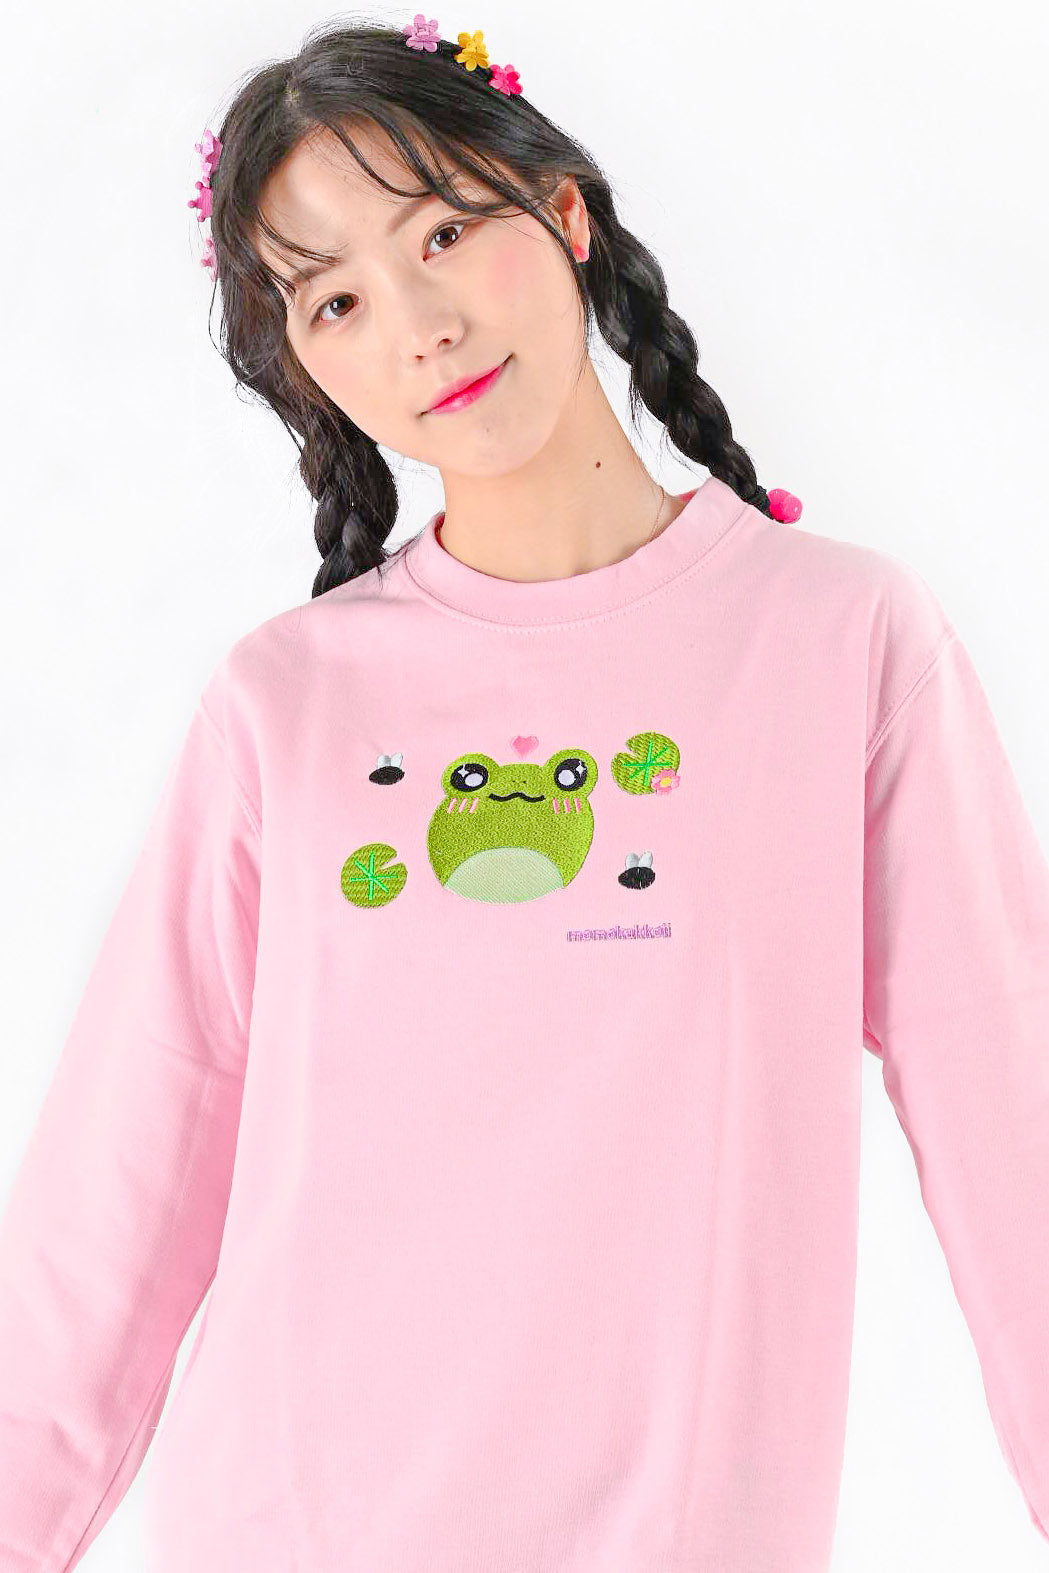 Froggy and Lily Pads Embroidered Sweatshirt - Momokakkoii